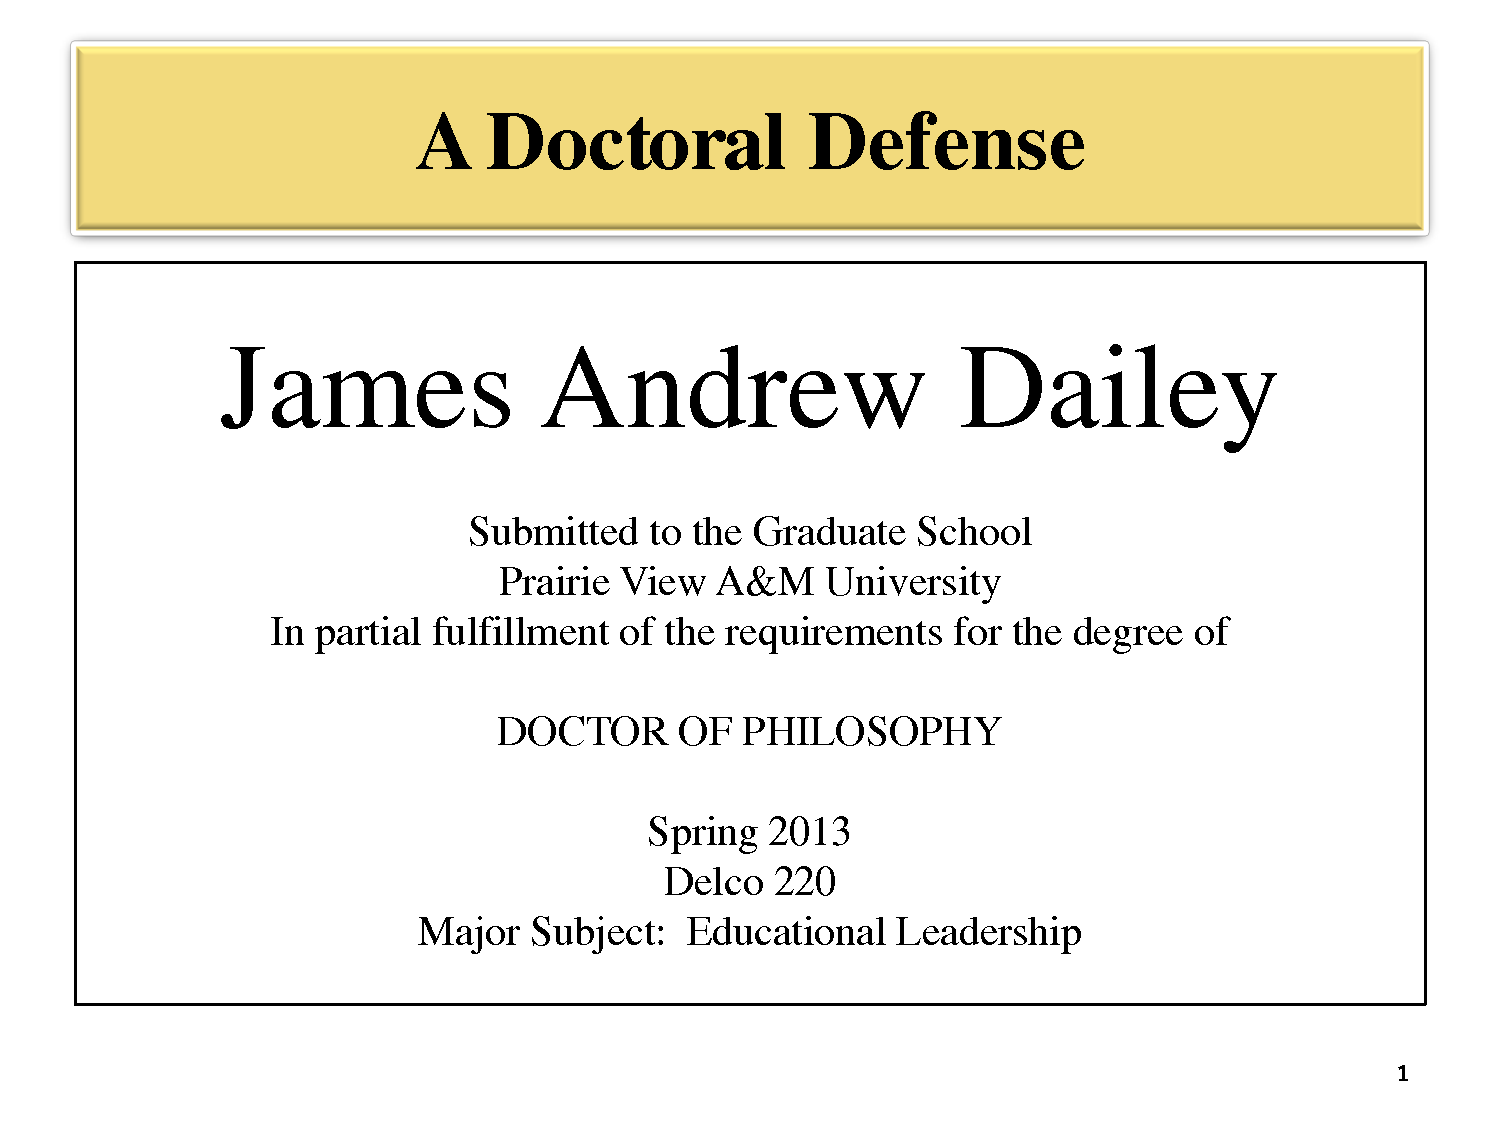 Doctoral dissertation defense video